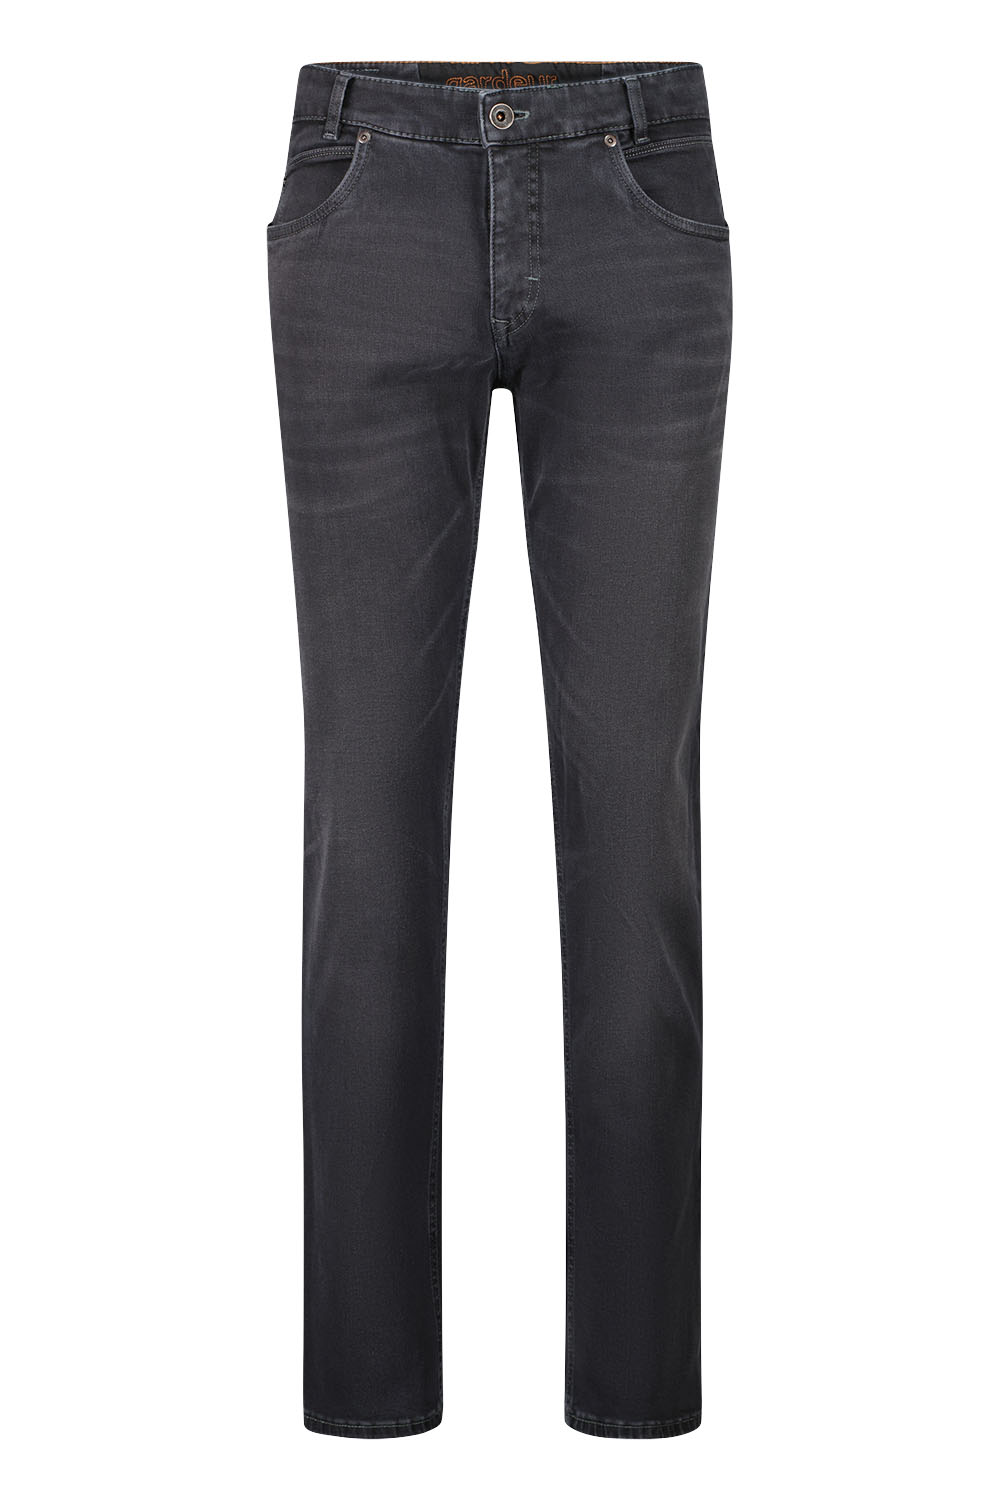 Gardeur - Bennet 5-Pocket Modern Fit Jeans Black Used - 38/30 - Heren